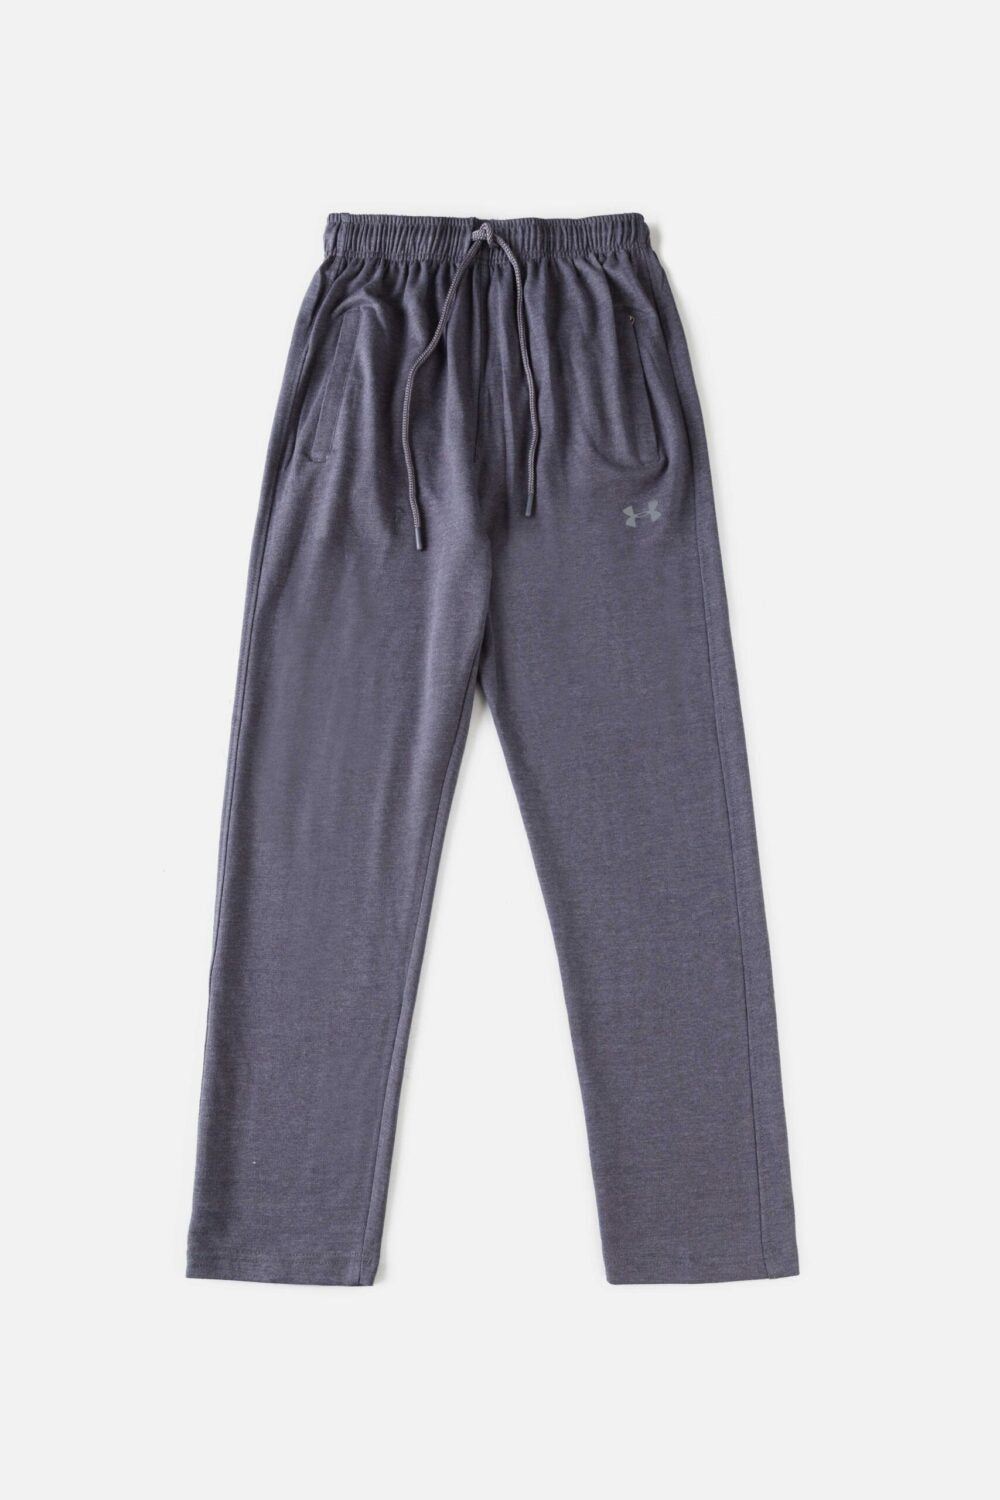 UA Premium Cotton Trouser – Grey